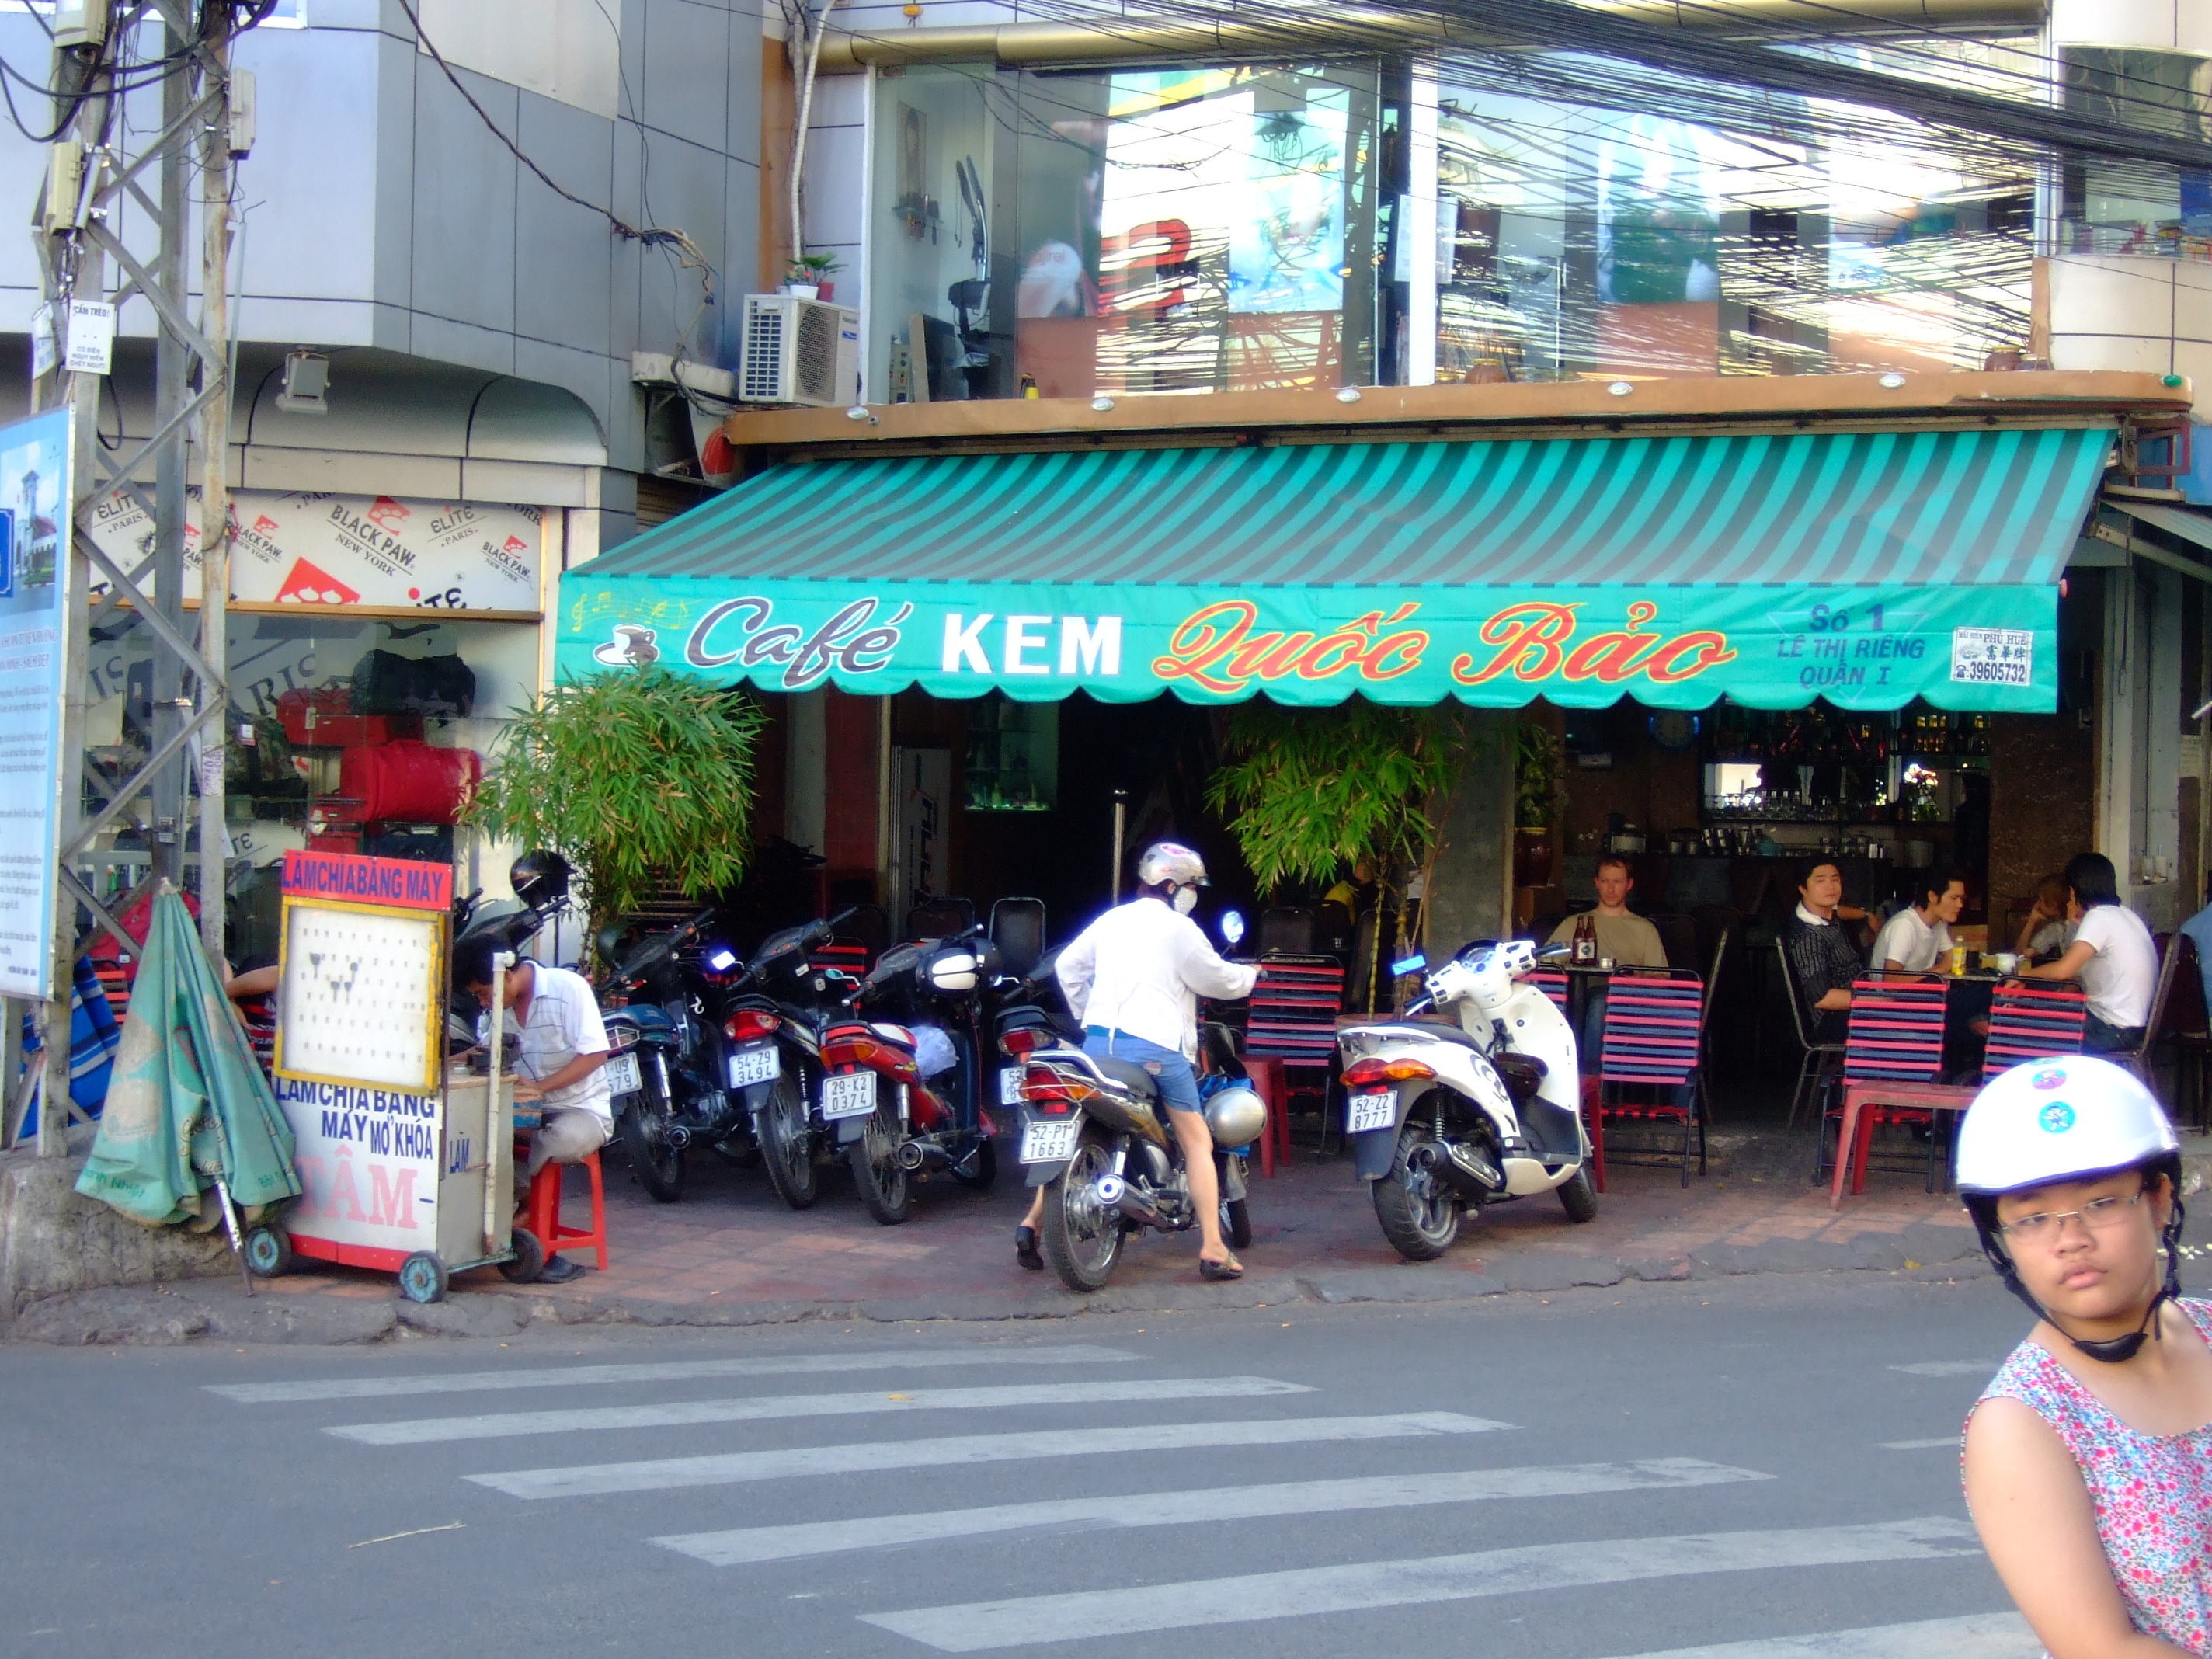 Vietnam Ho Chi Minh City motorbike street scenes Feb 2009 085